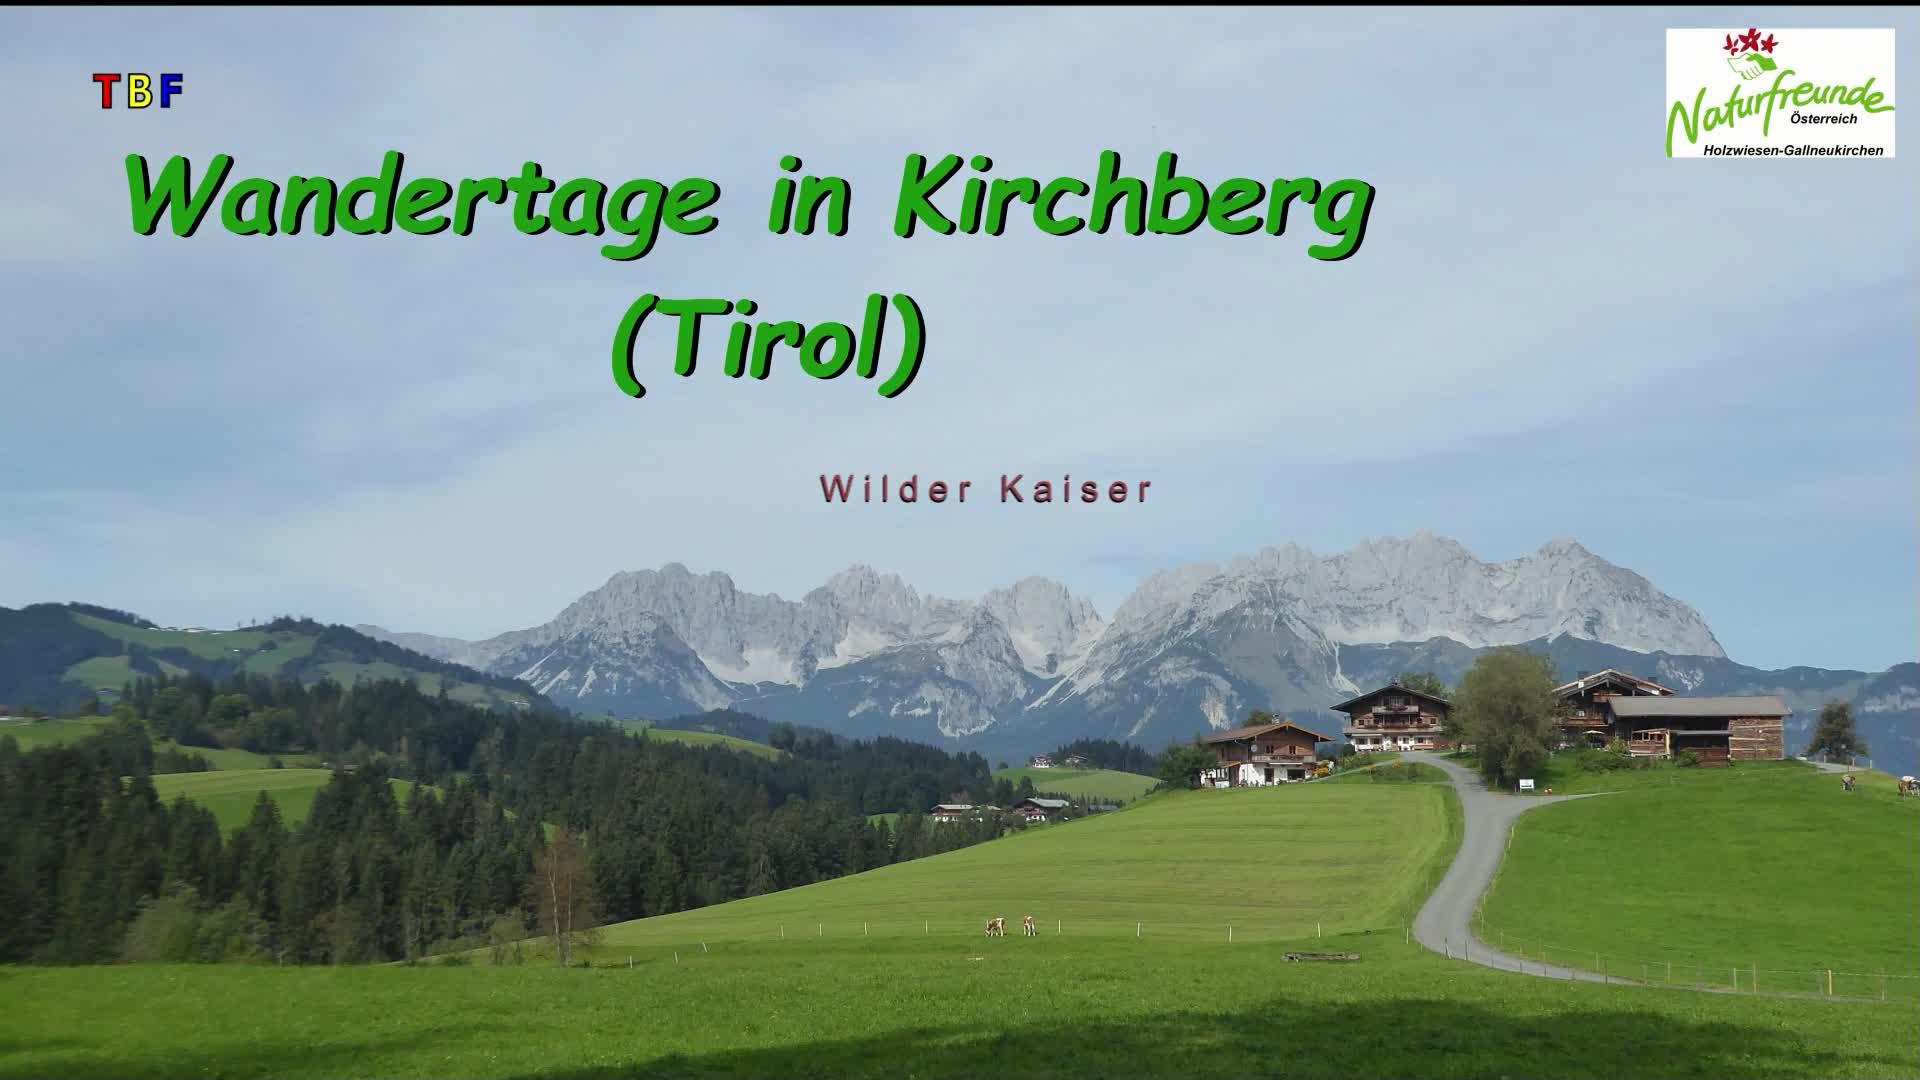 Wandertage in Kirchberg bei Kitzbühel im Brixental